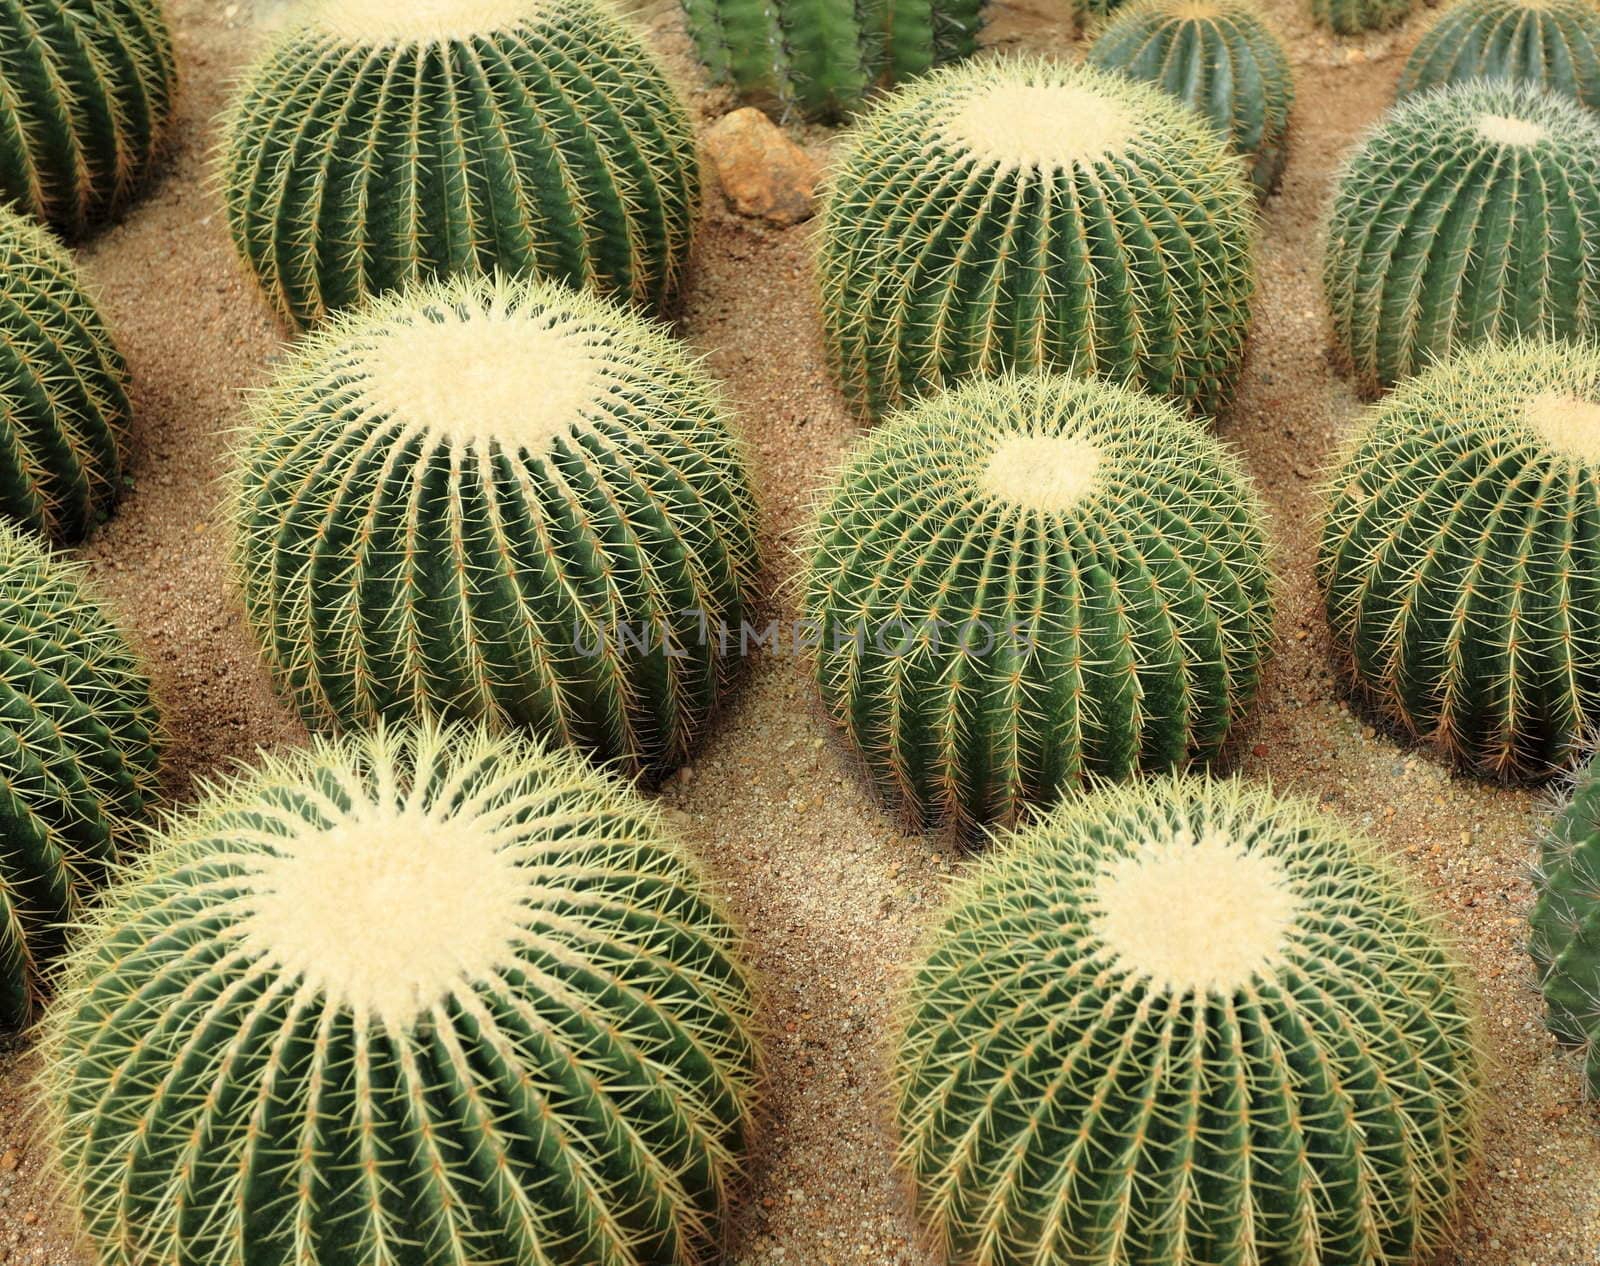 many cactaceae